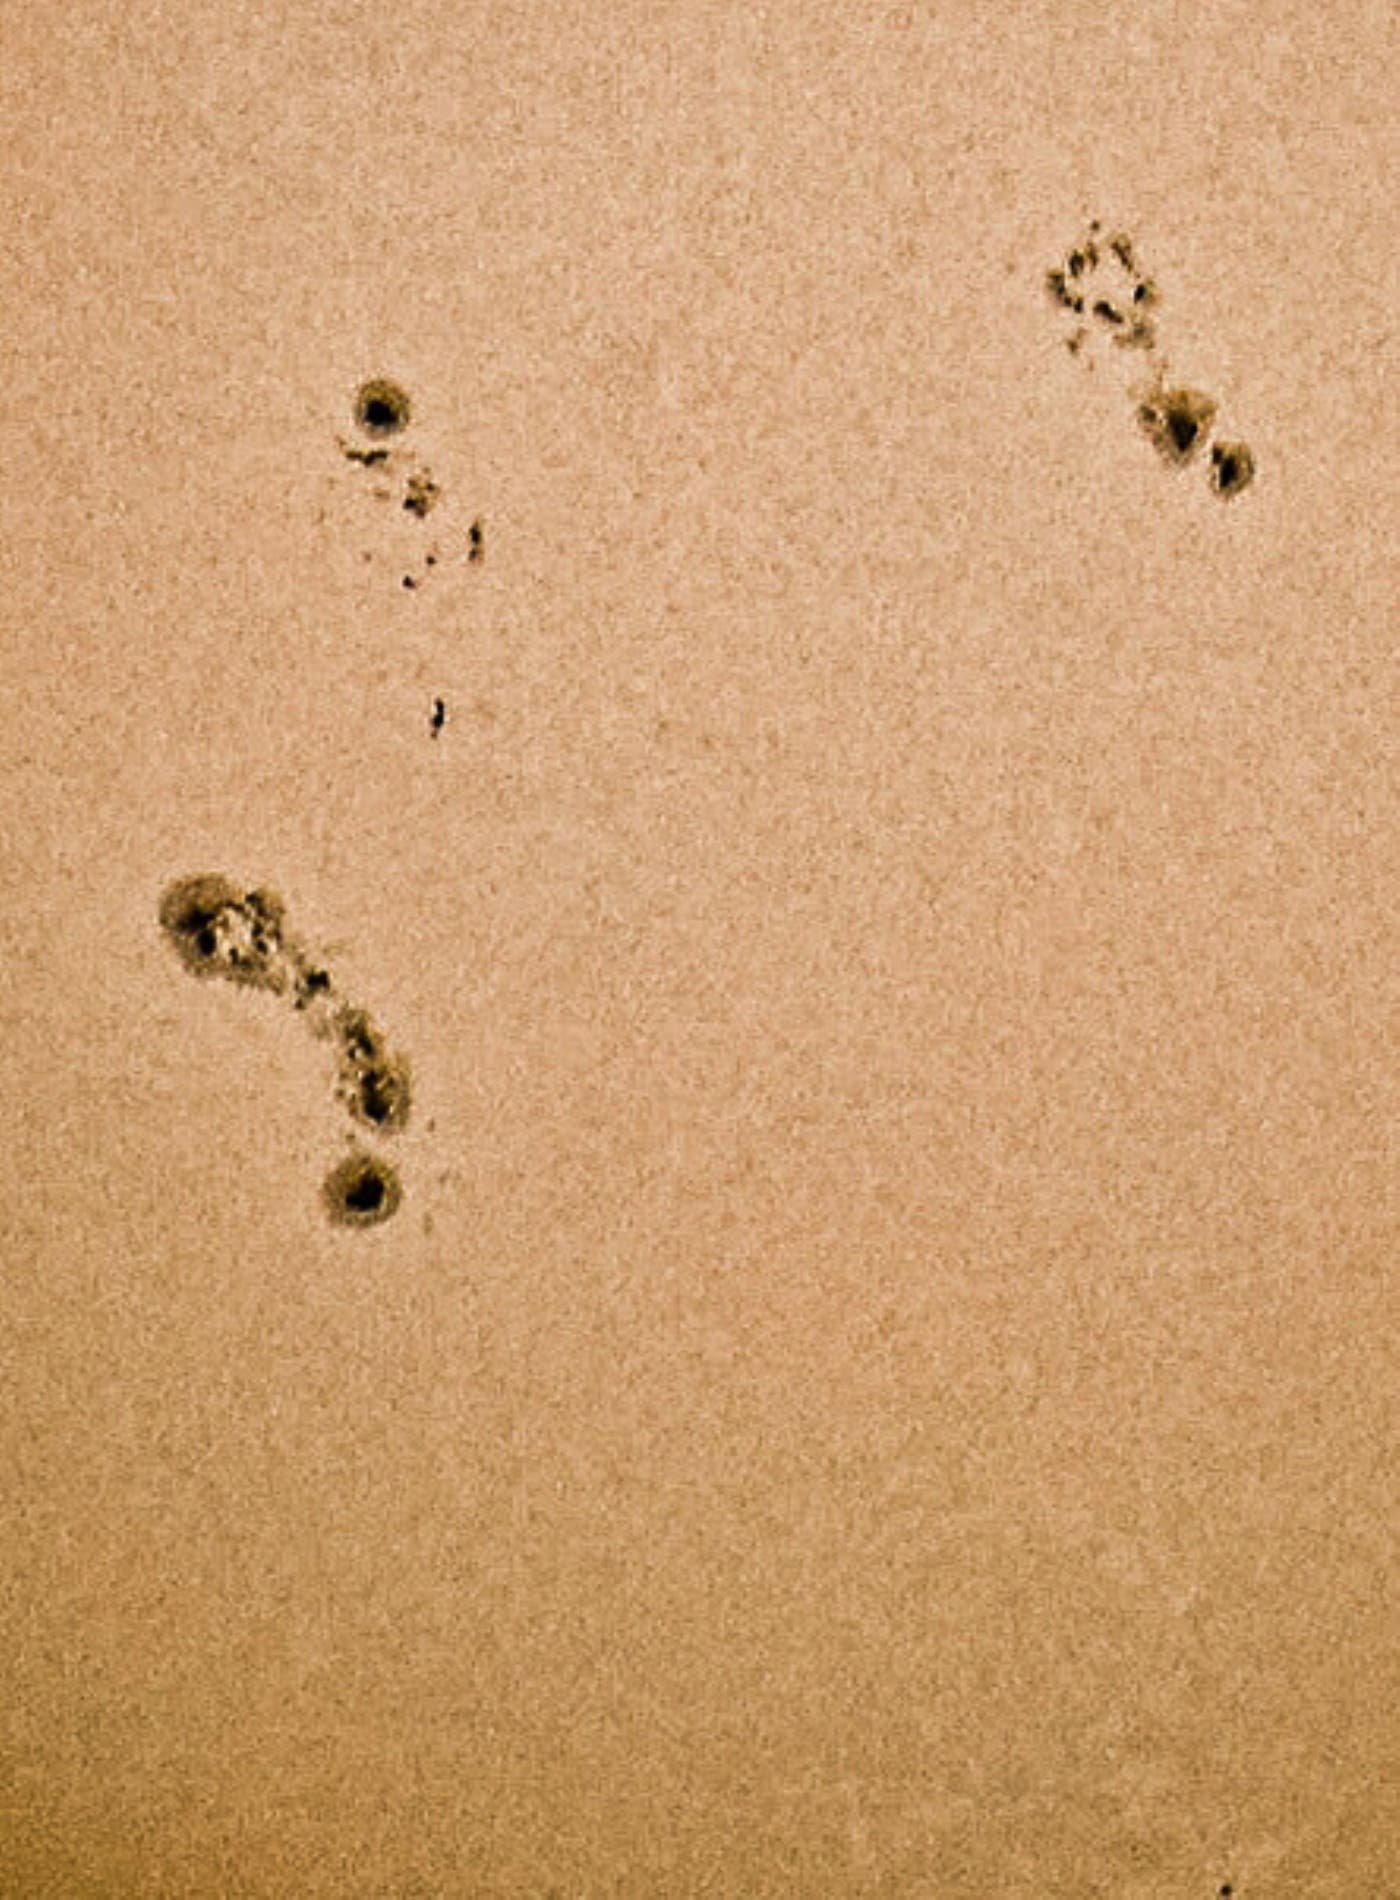 Current Sunspots Sicily-Ragusa 